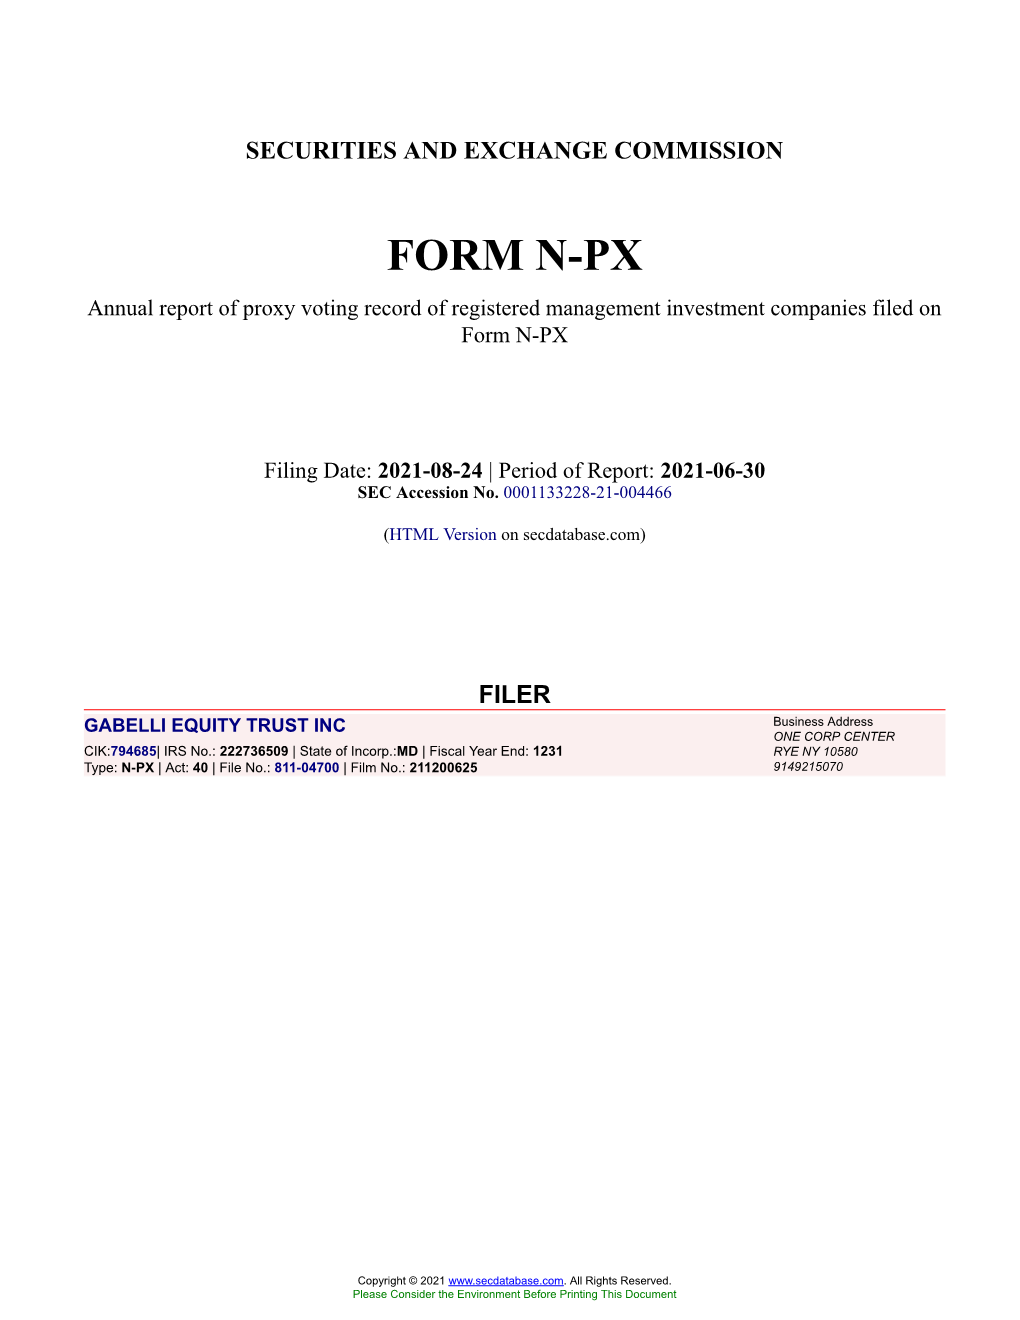 GABELLI EQUITY TRUST INC Form N-PX Filed